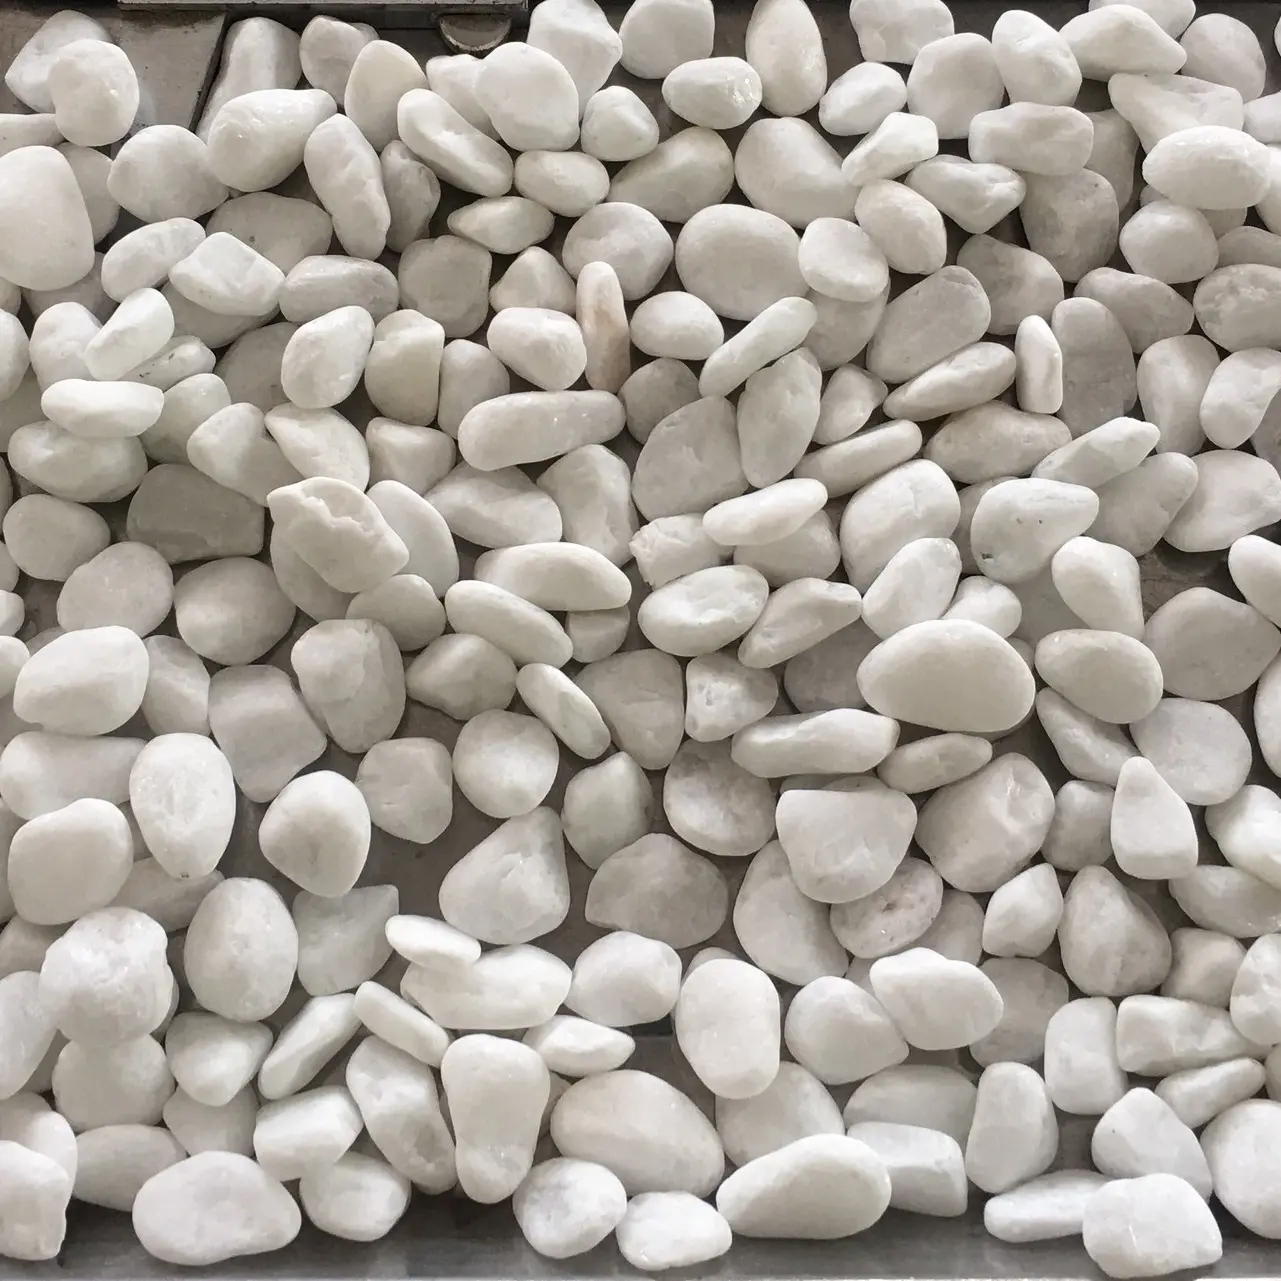 Natural white pebble stone for landscape stone paving stones